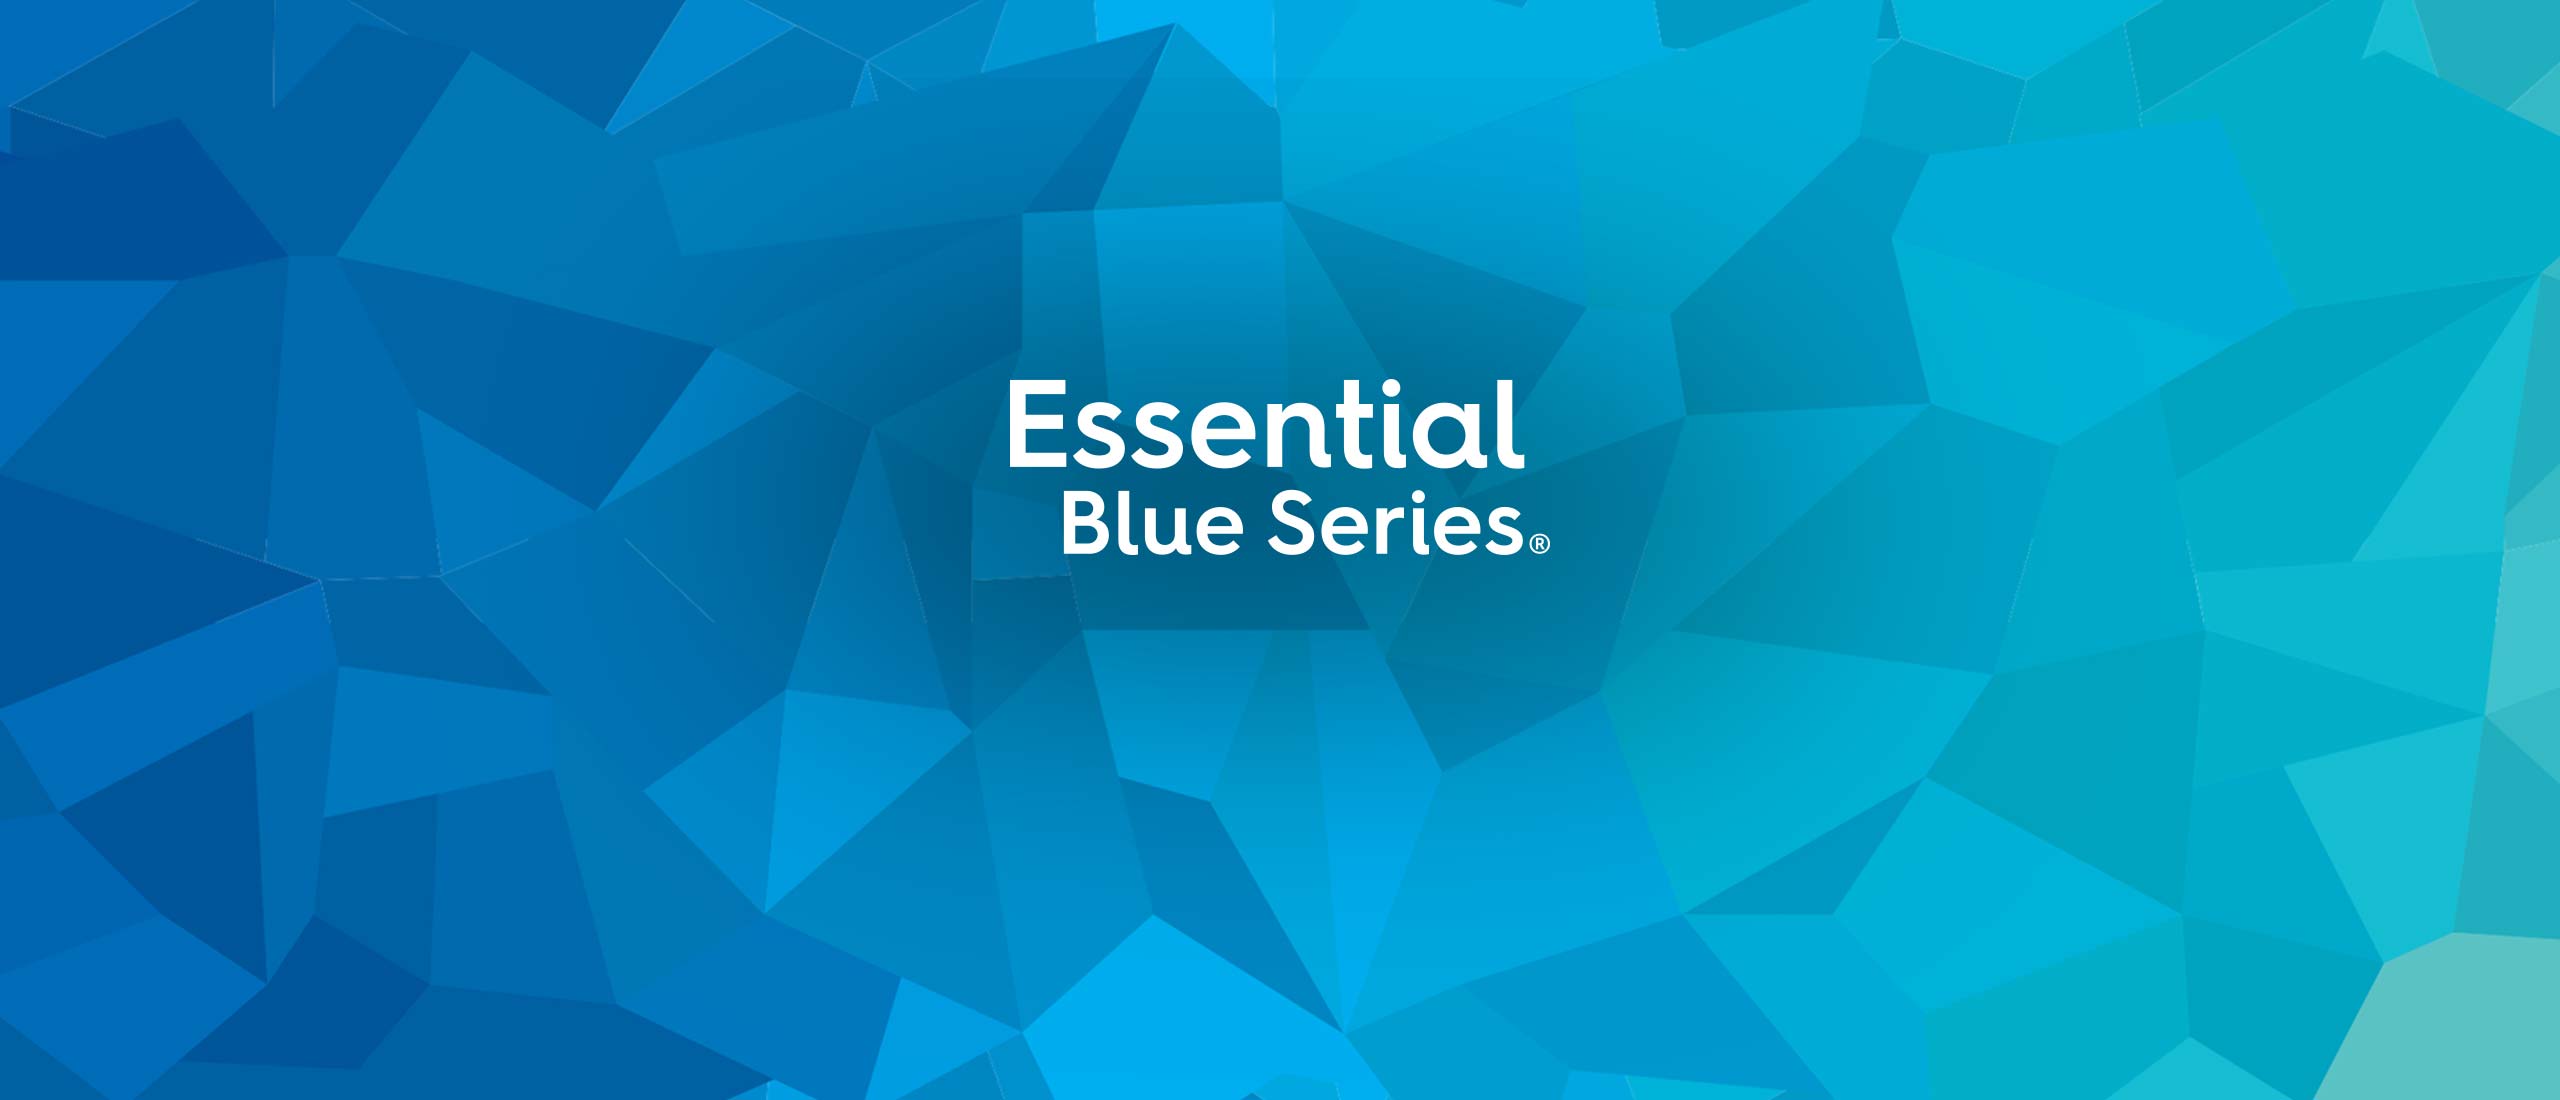 Essential Blue Series™ 